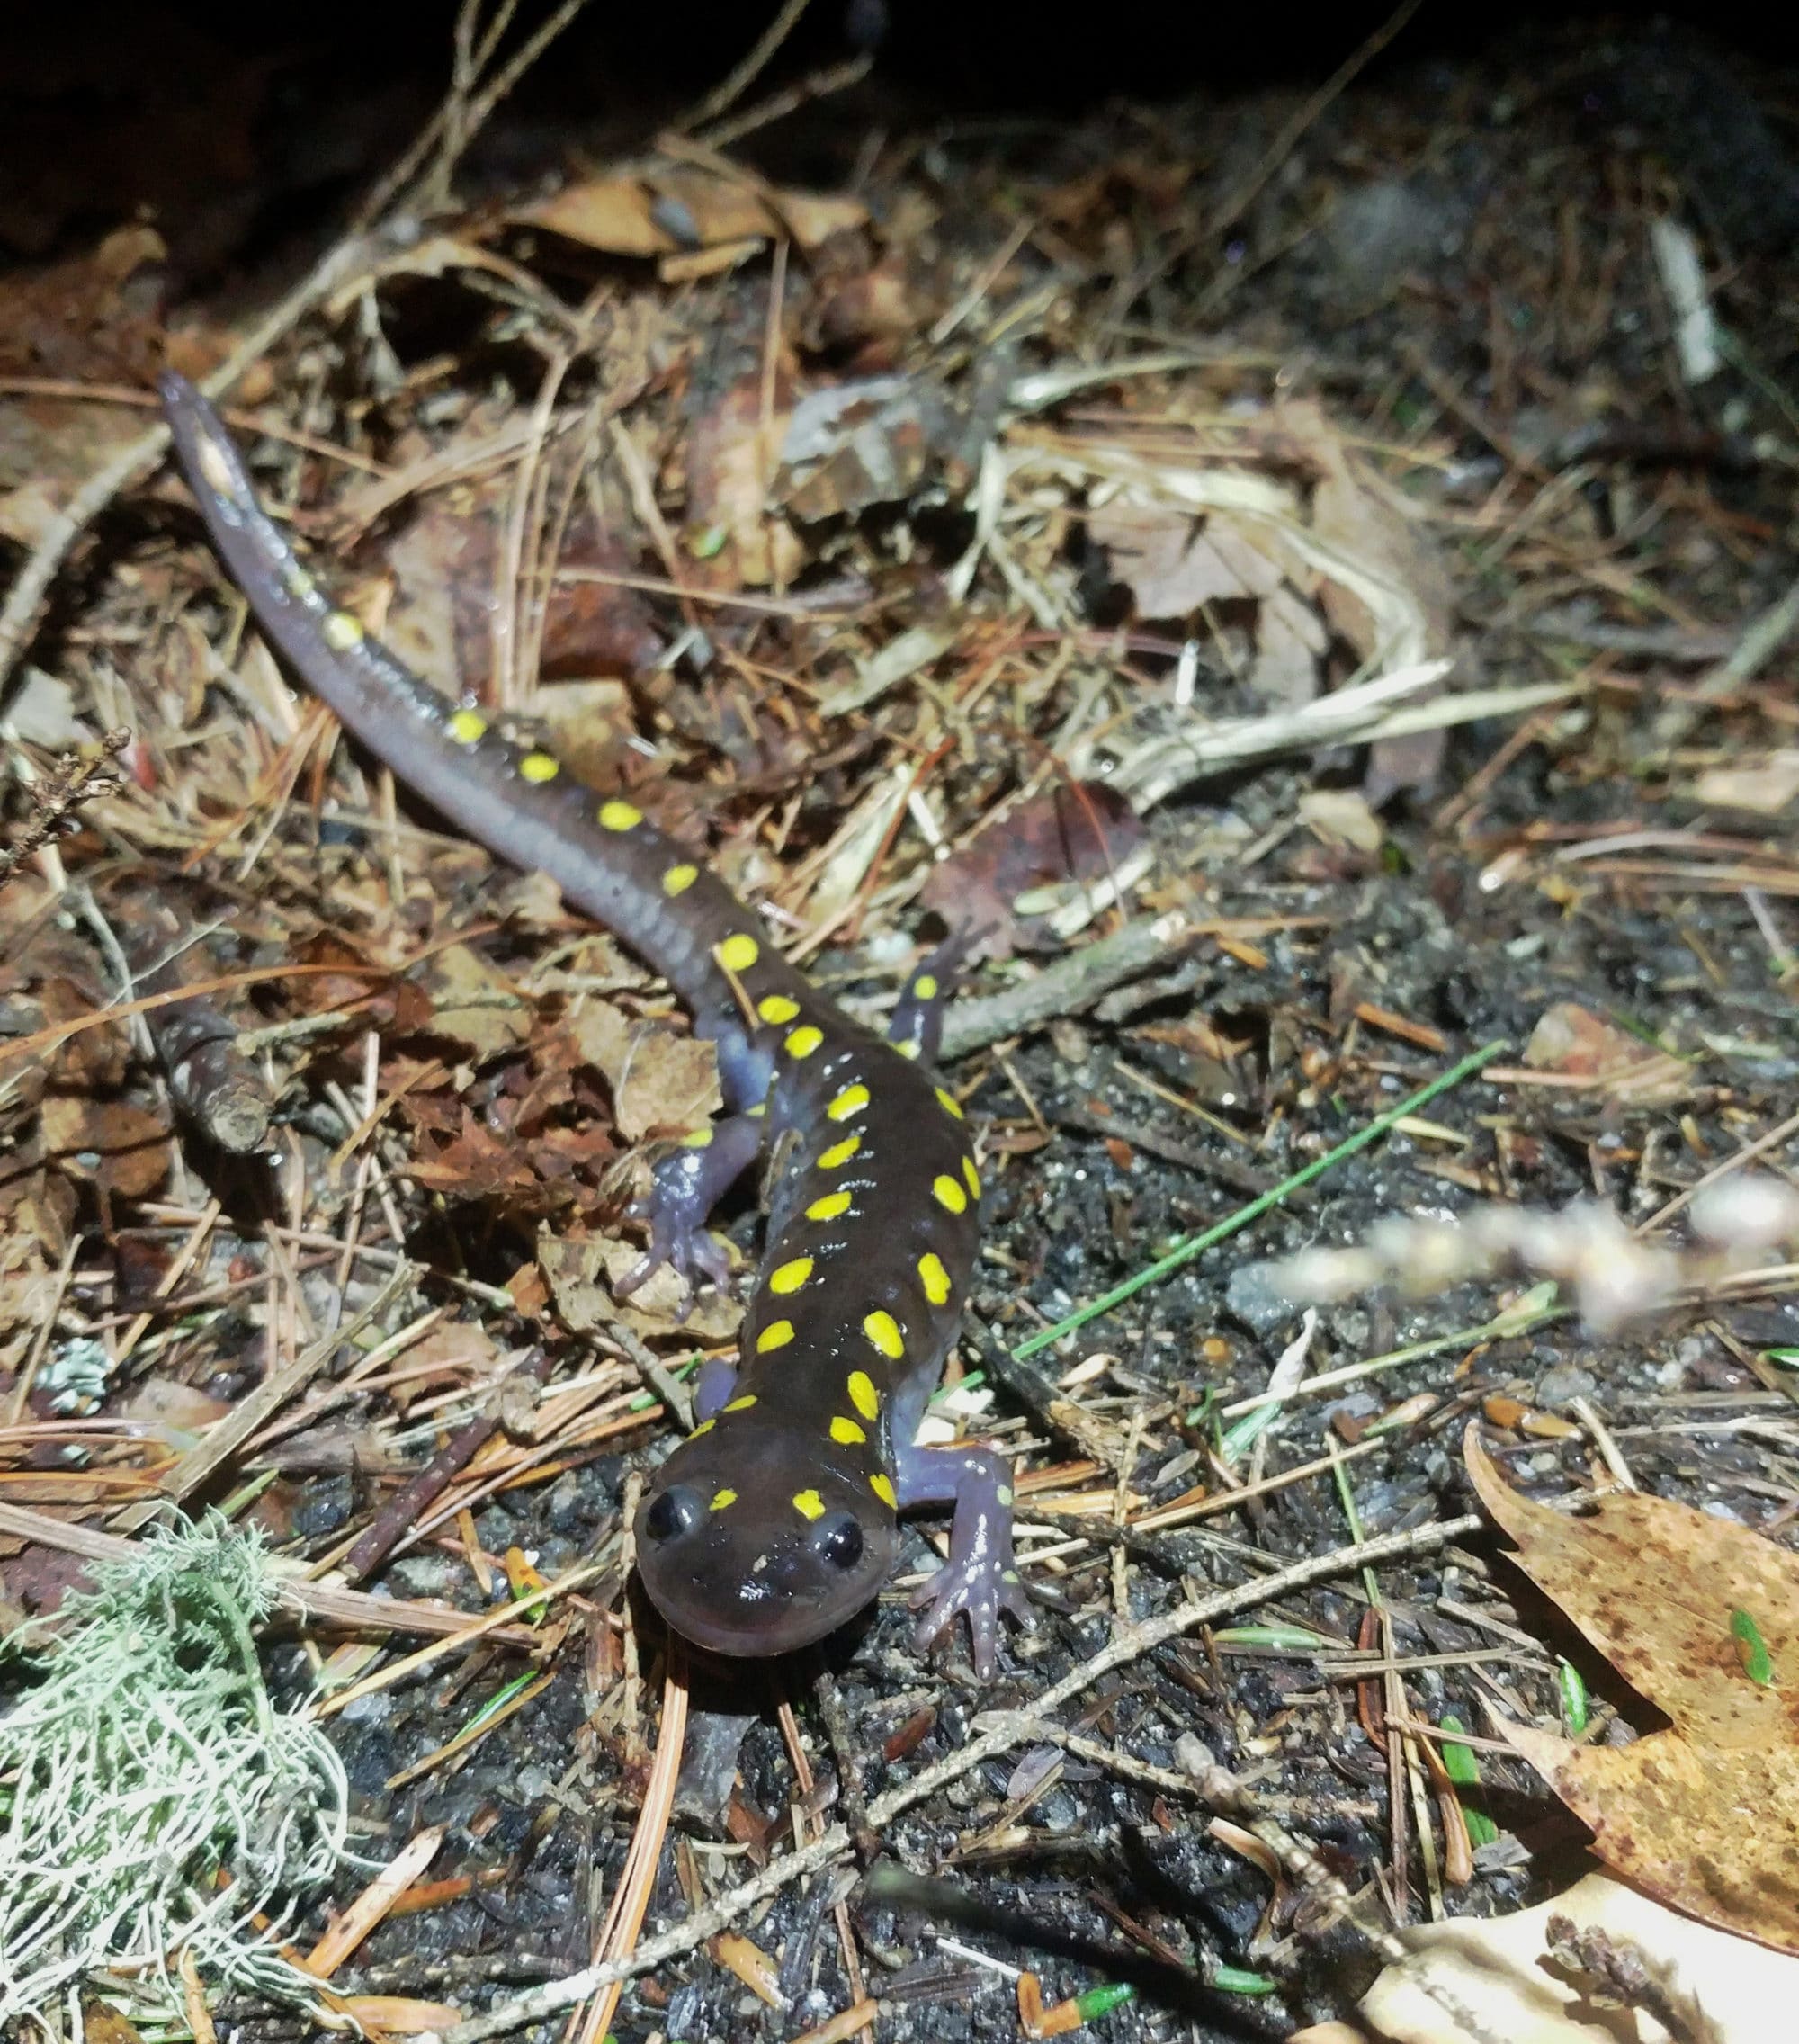 A spotted salamander walks along an unpaved road shoulder. (photo © Jenifer Dickinson)